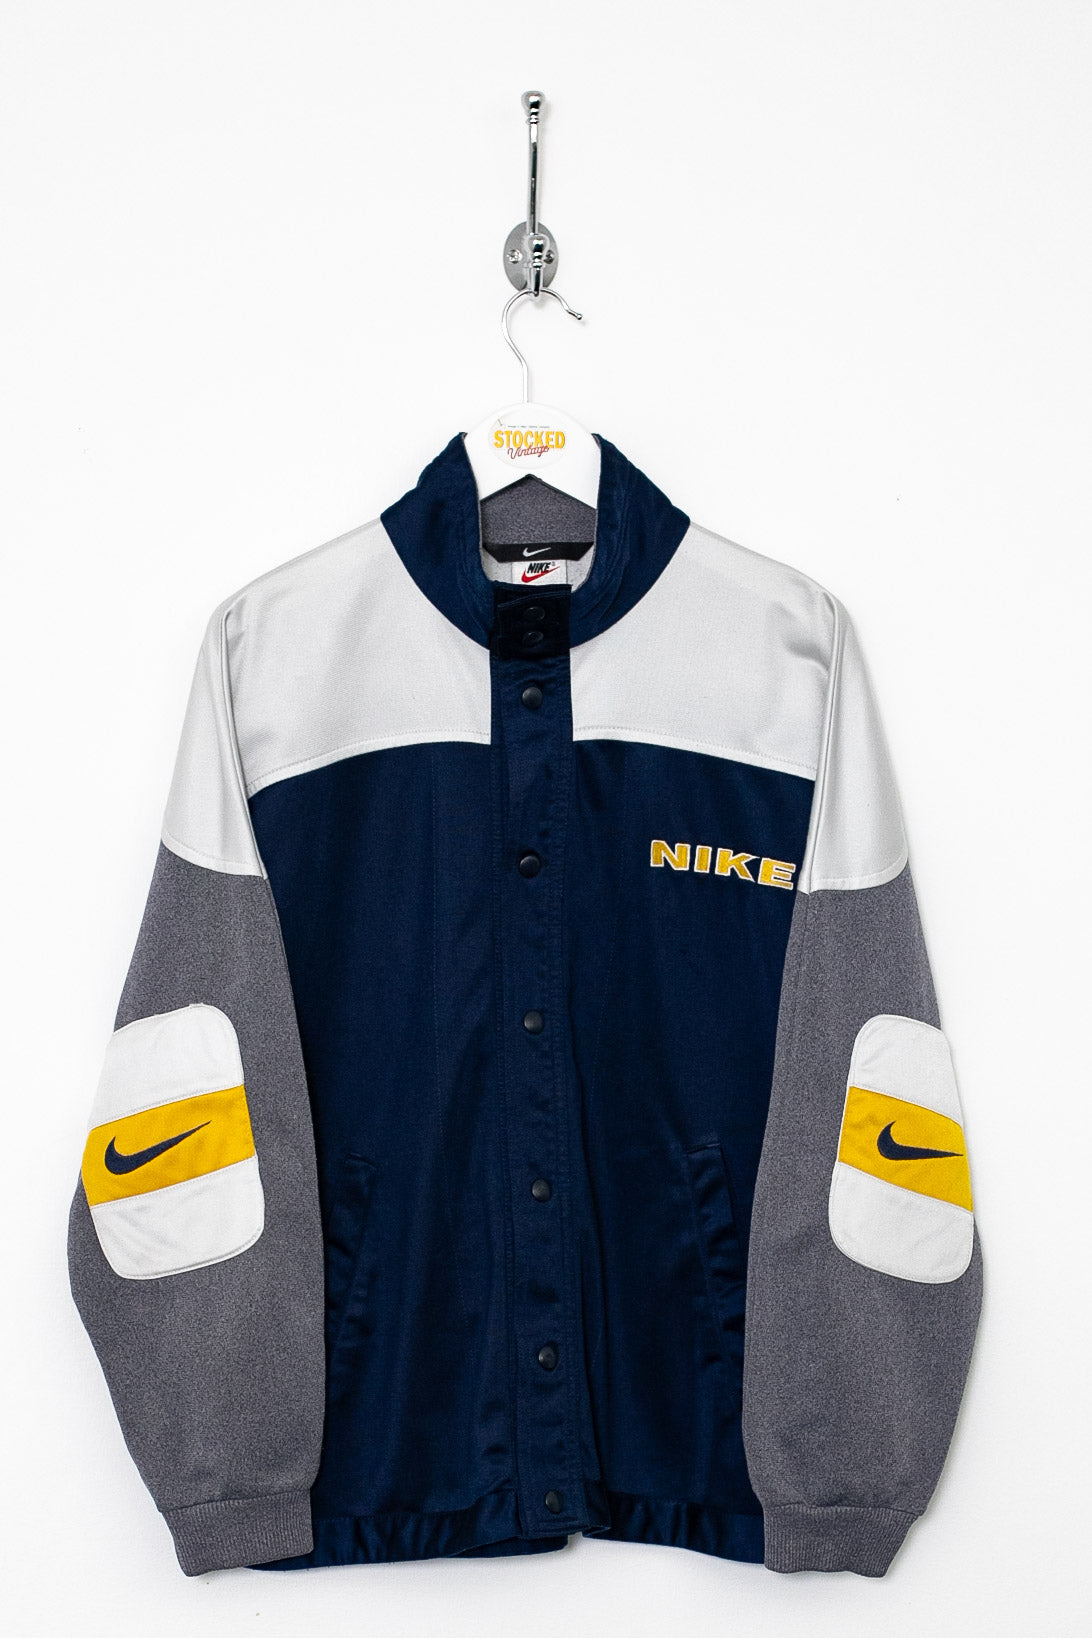 Womens 90s Nike Jacket (M)